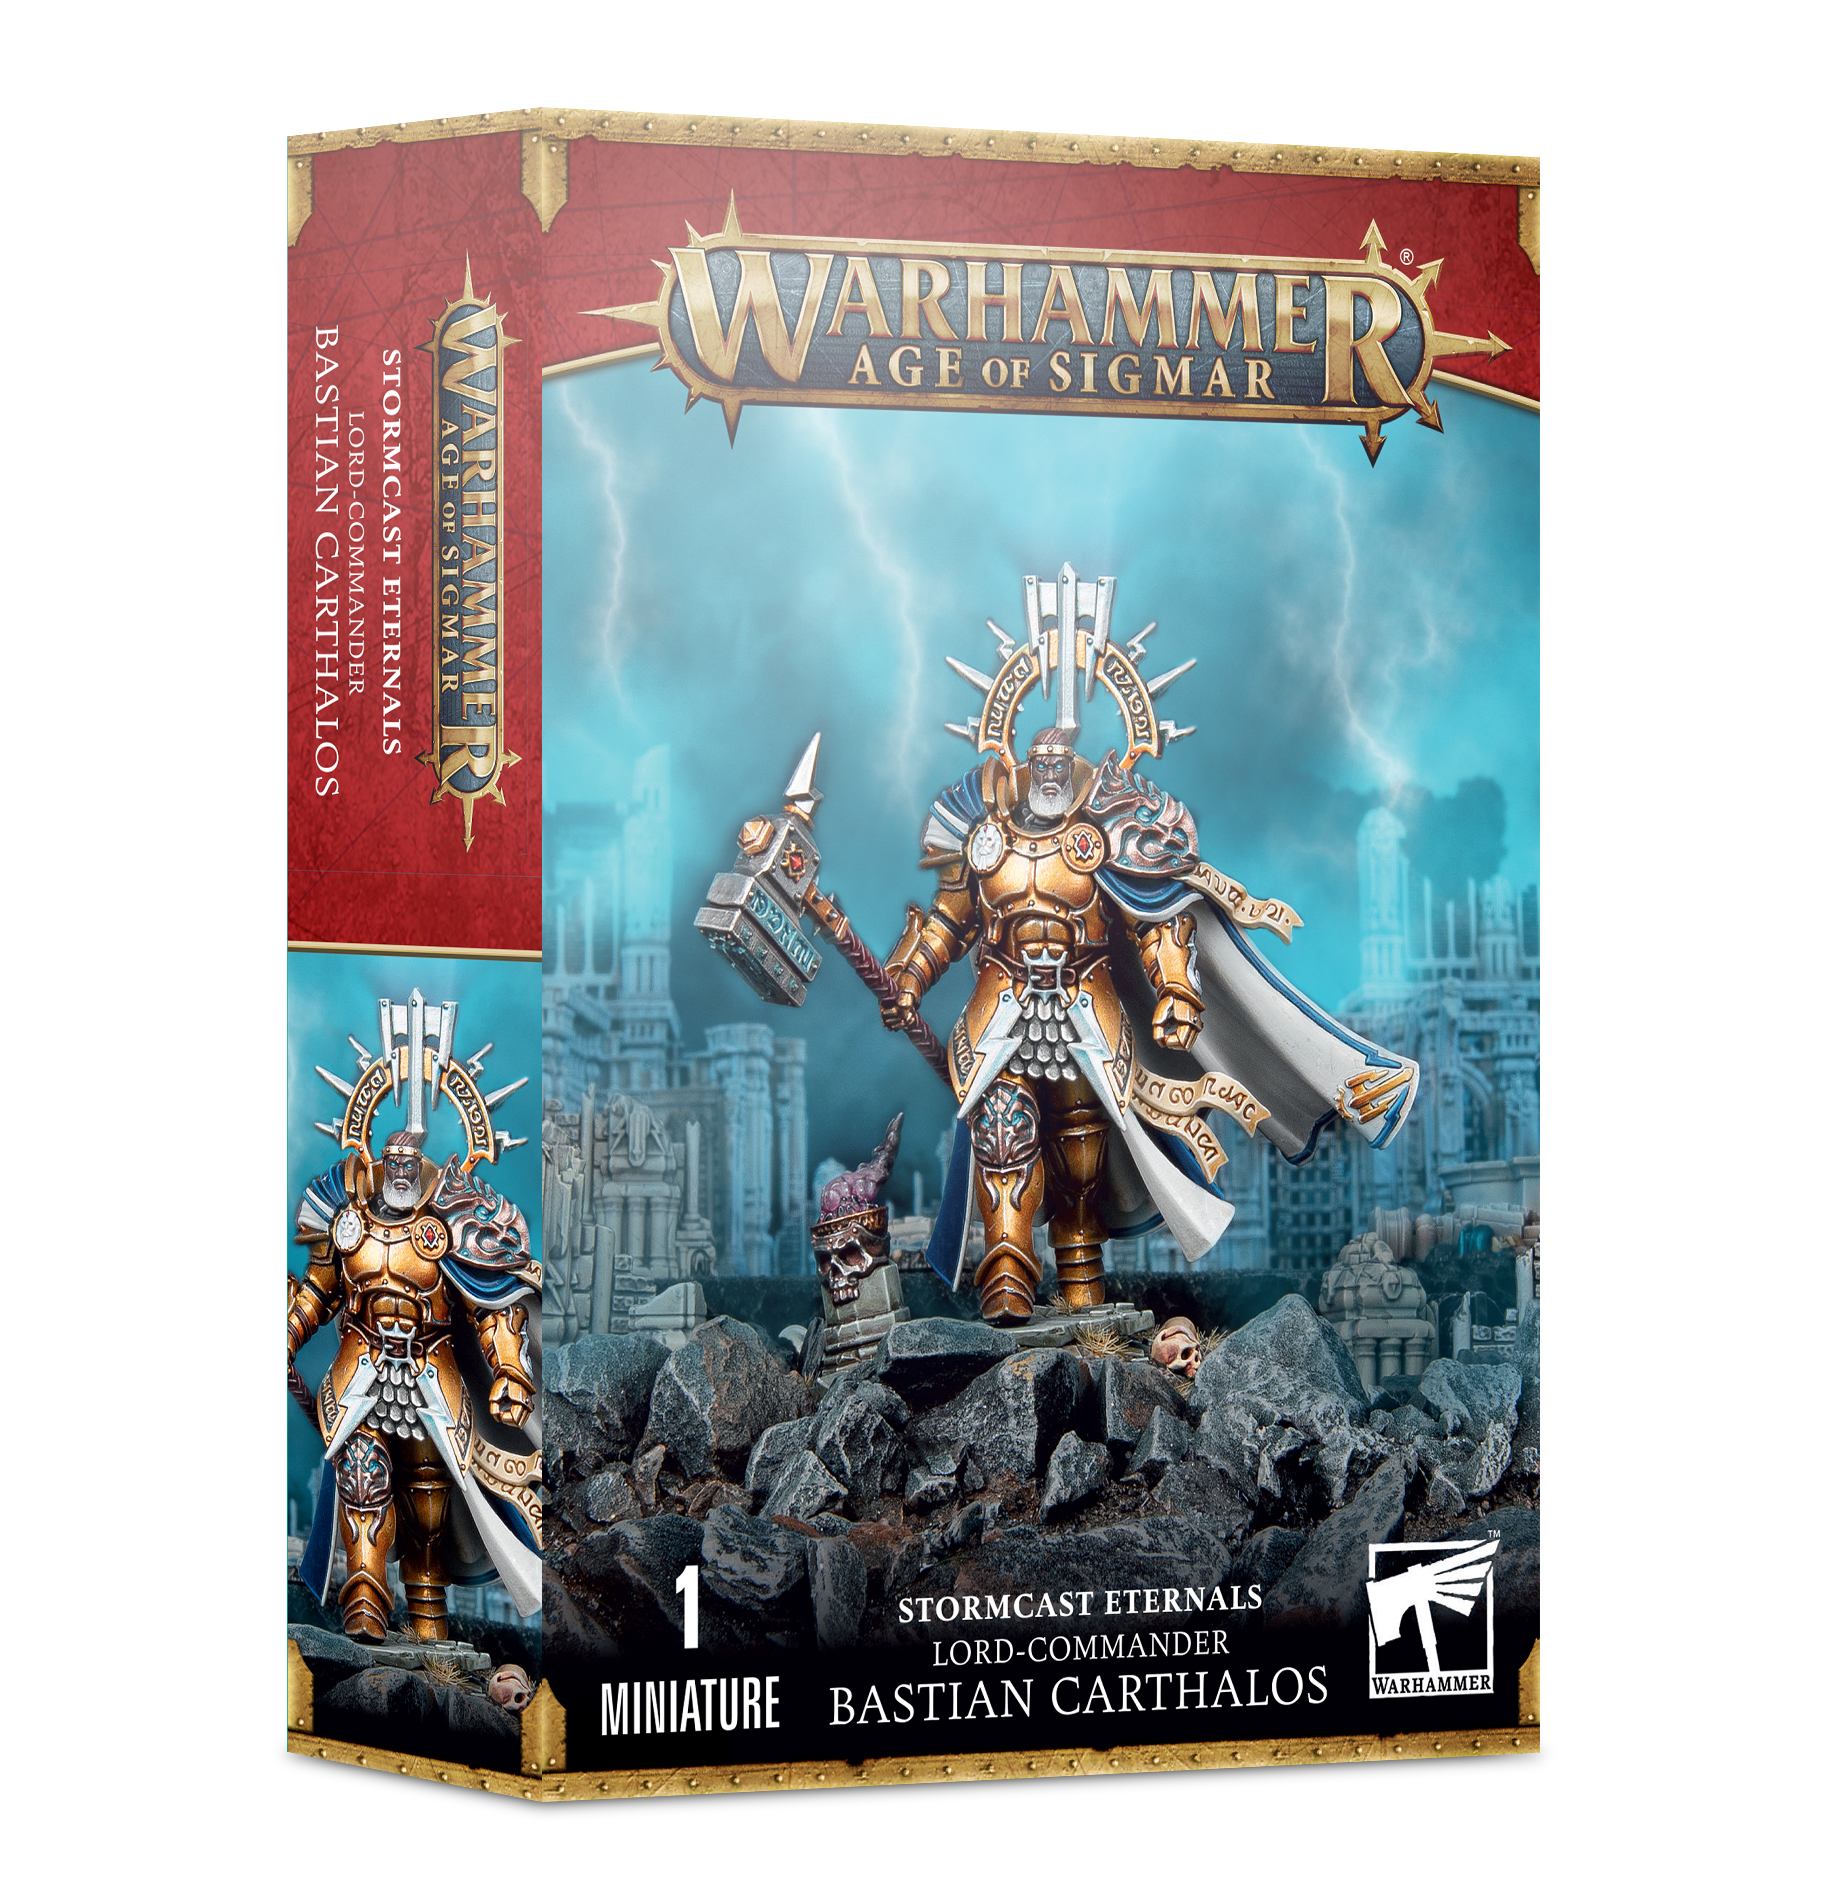 Lord-Commander Bastian Carthalos - 96-52 - Stormcast Eternals - Warhammer Age of Sigmar